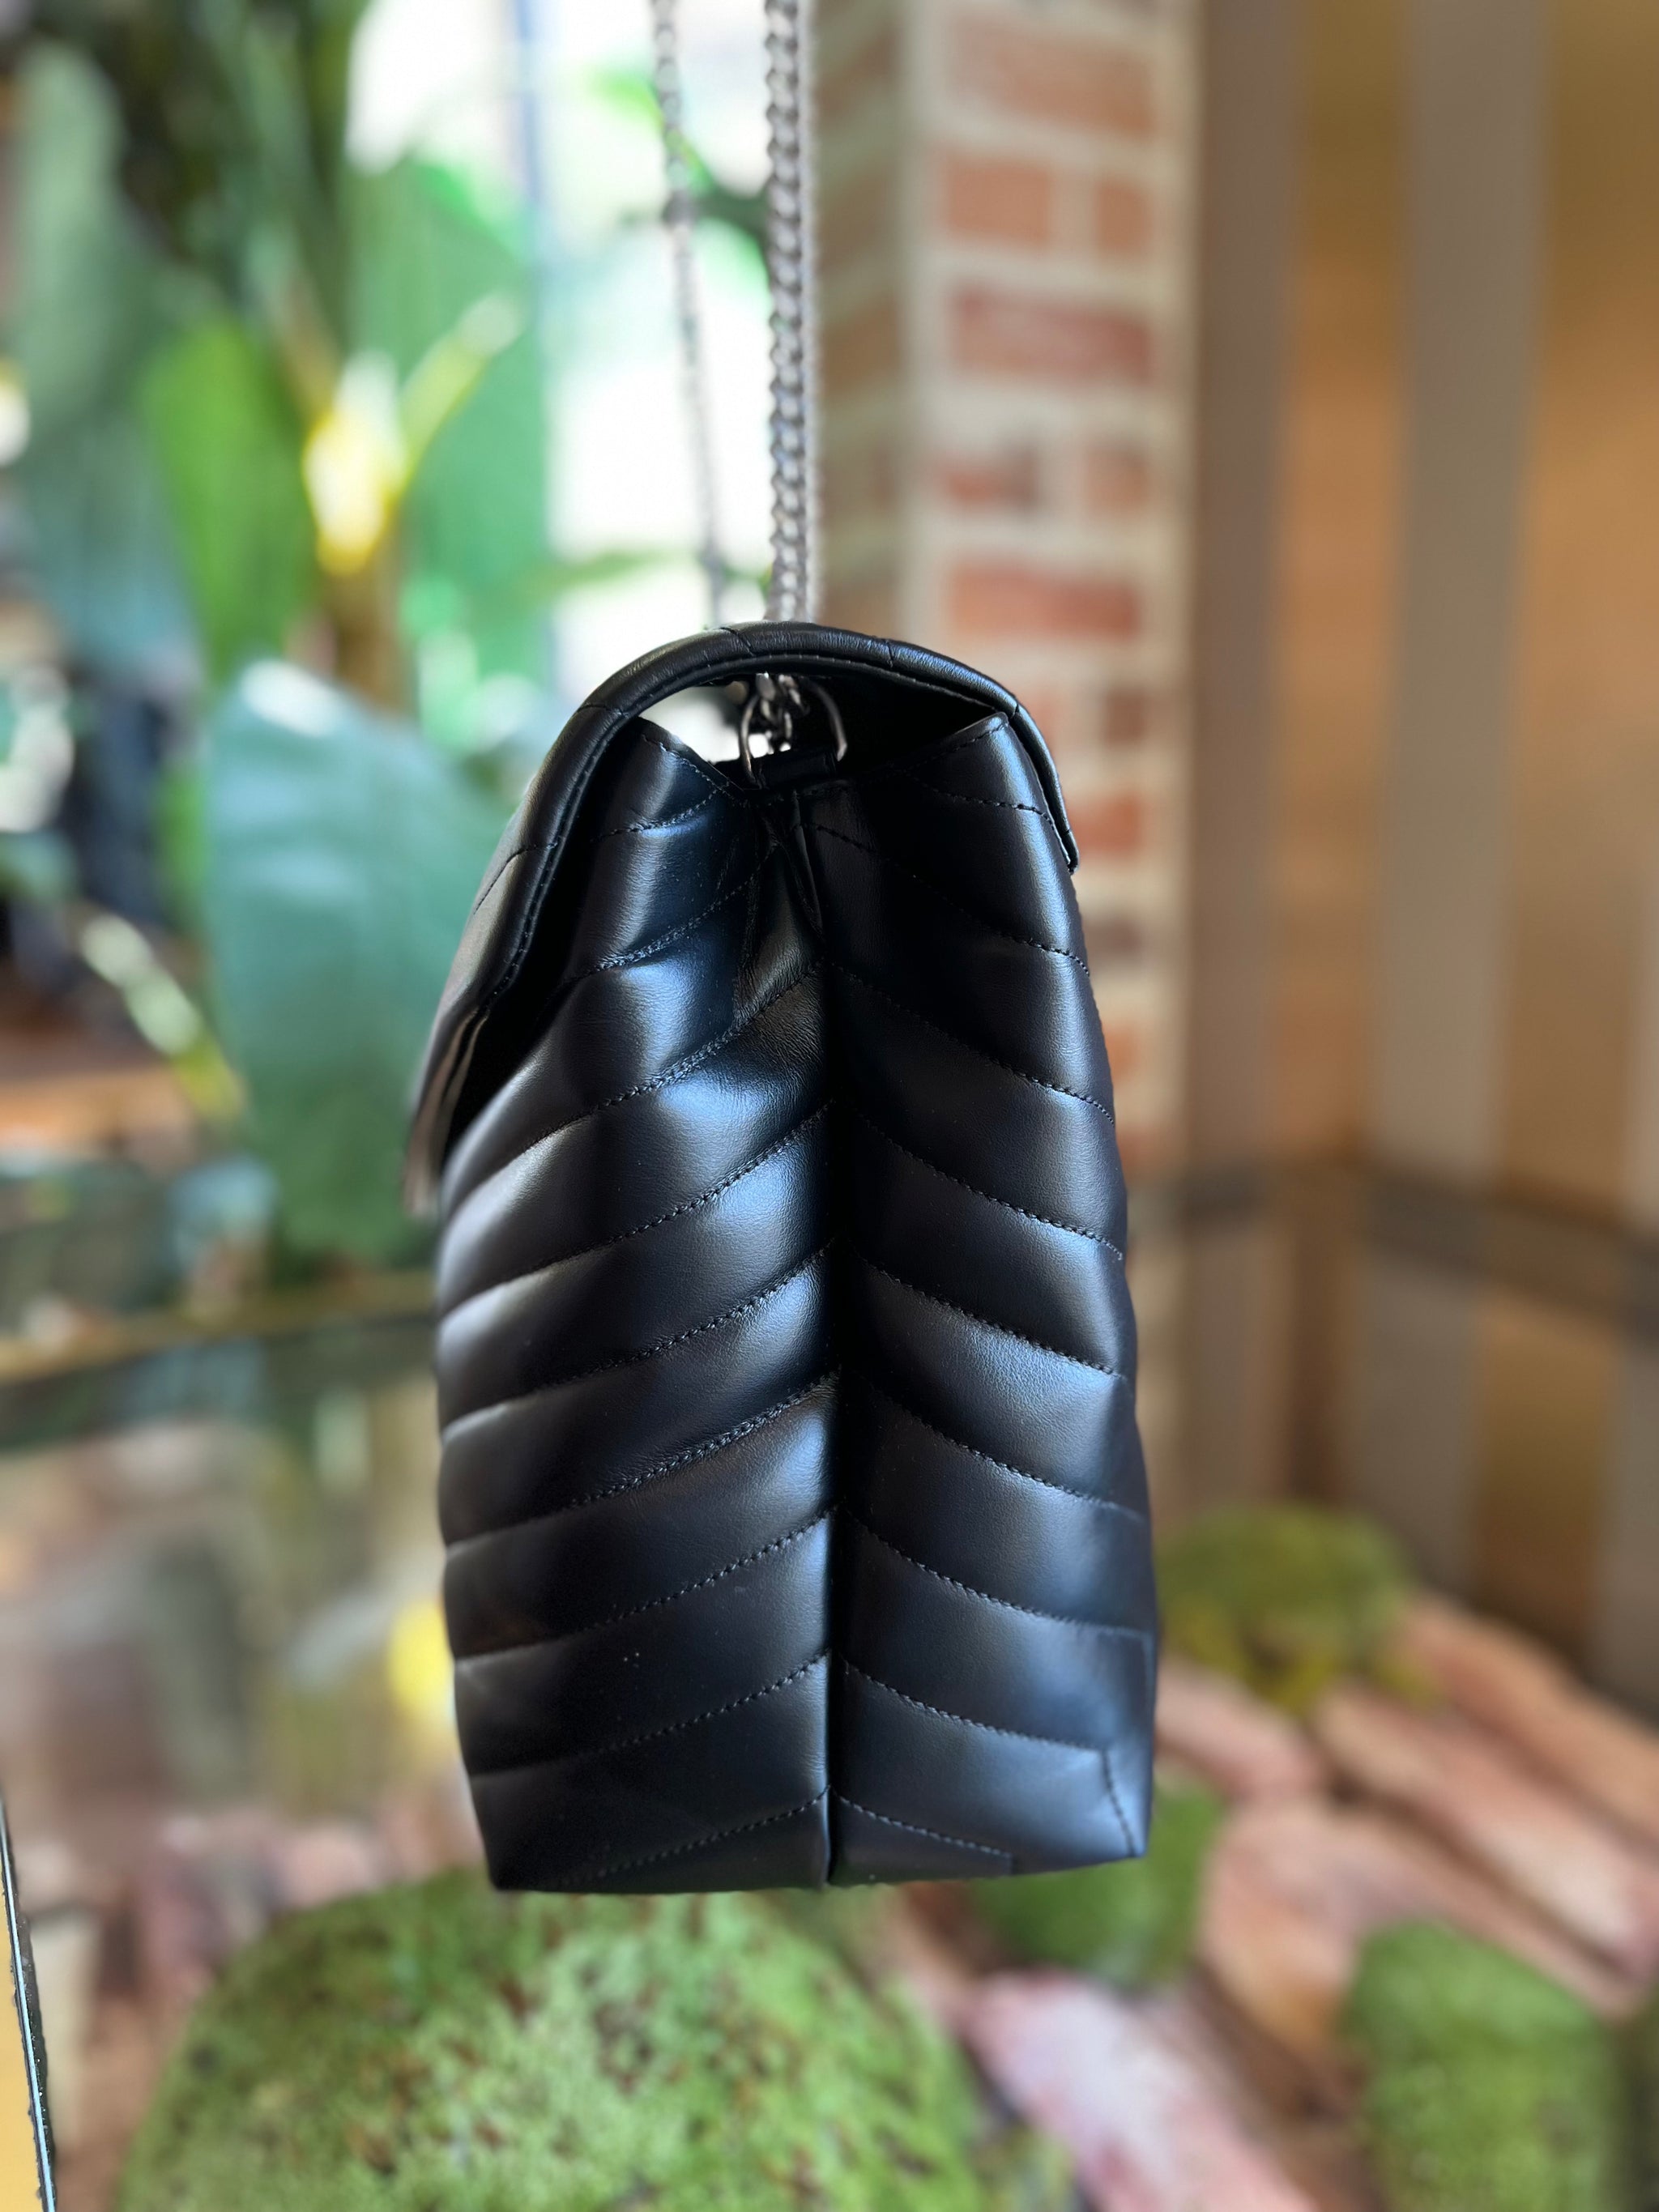 Saint Laurent Monogram Chevron-quilted Leather Cross-body Bag in Black